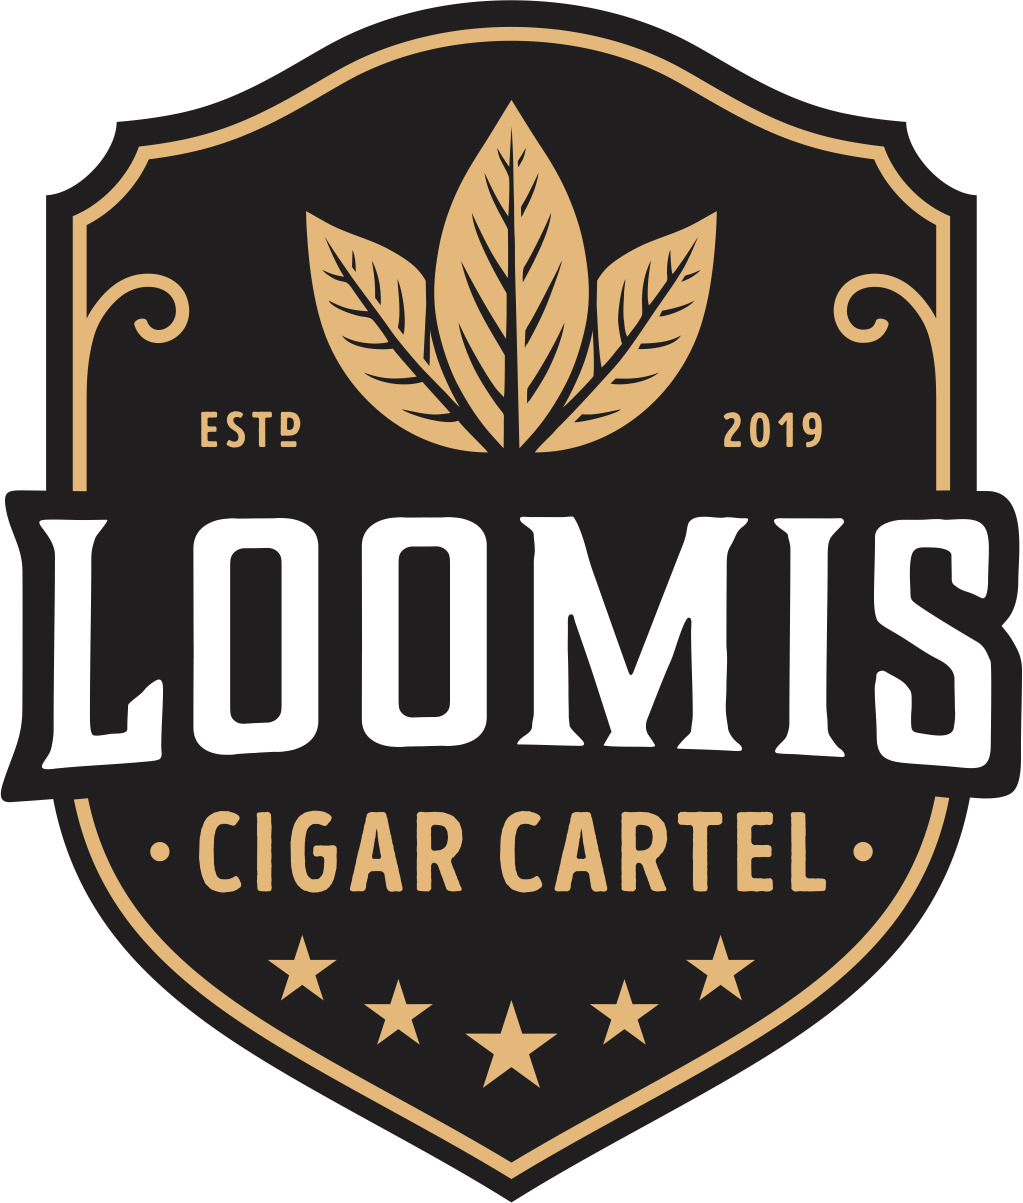 Loomis Cigar Cartel